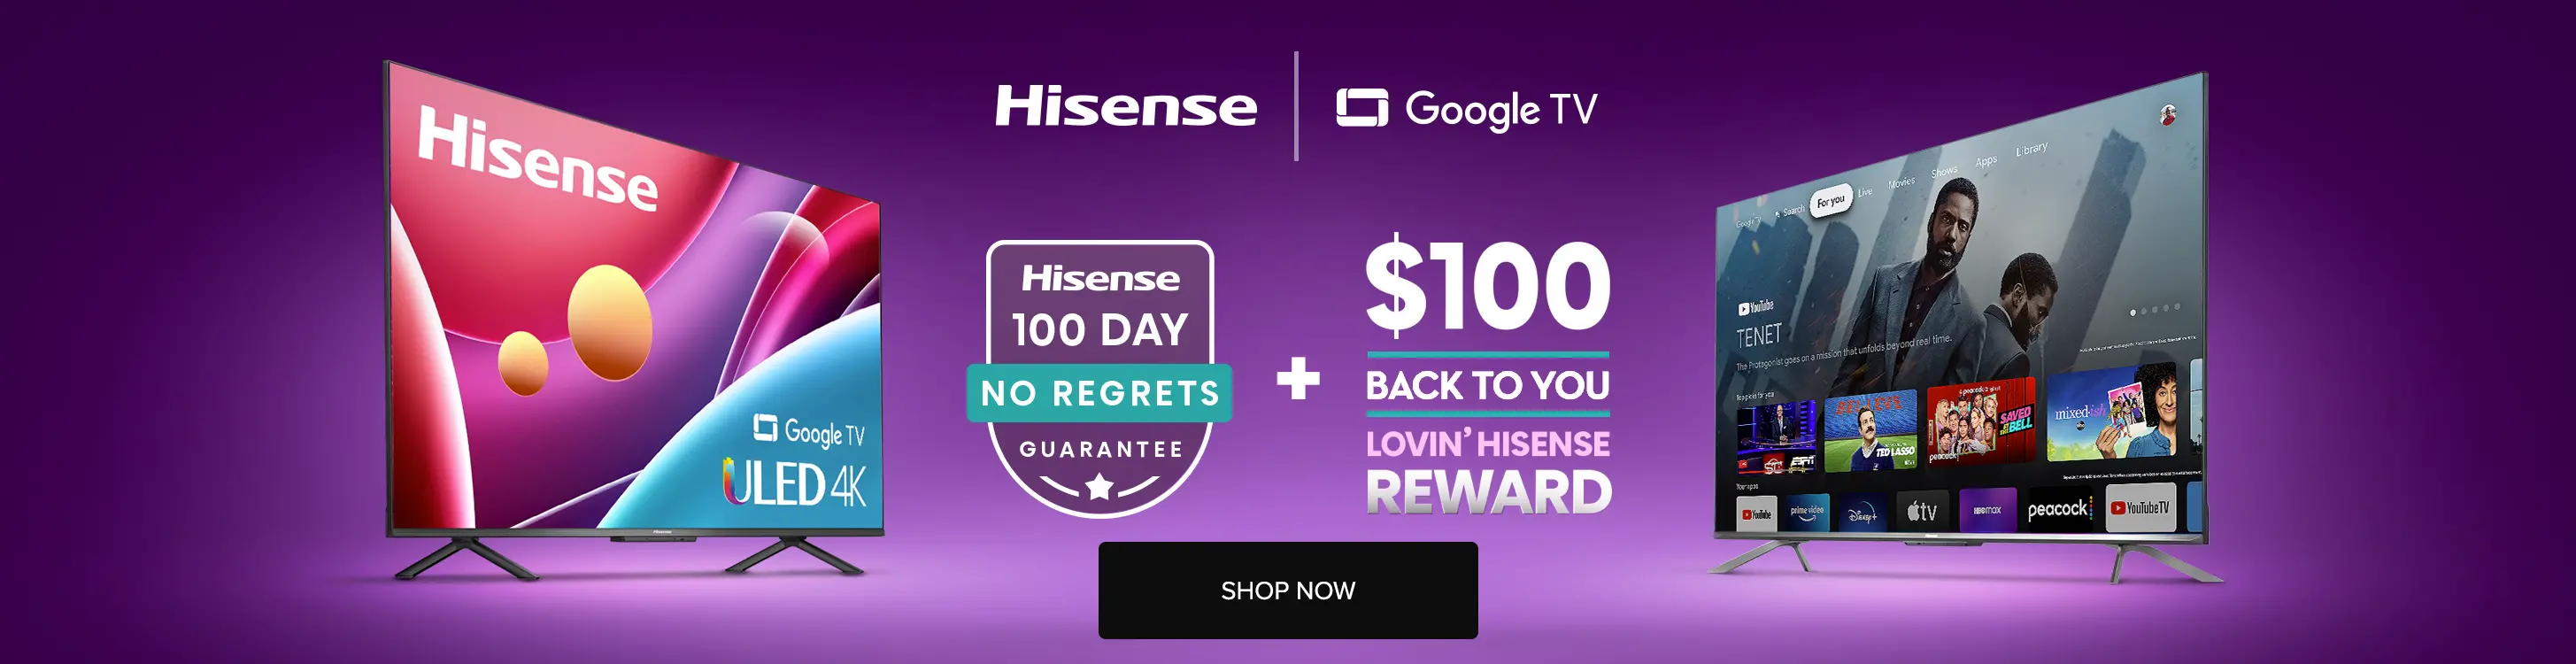 Hisense 100 Day No Regrets Guarantee!